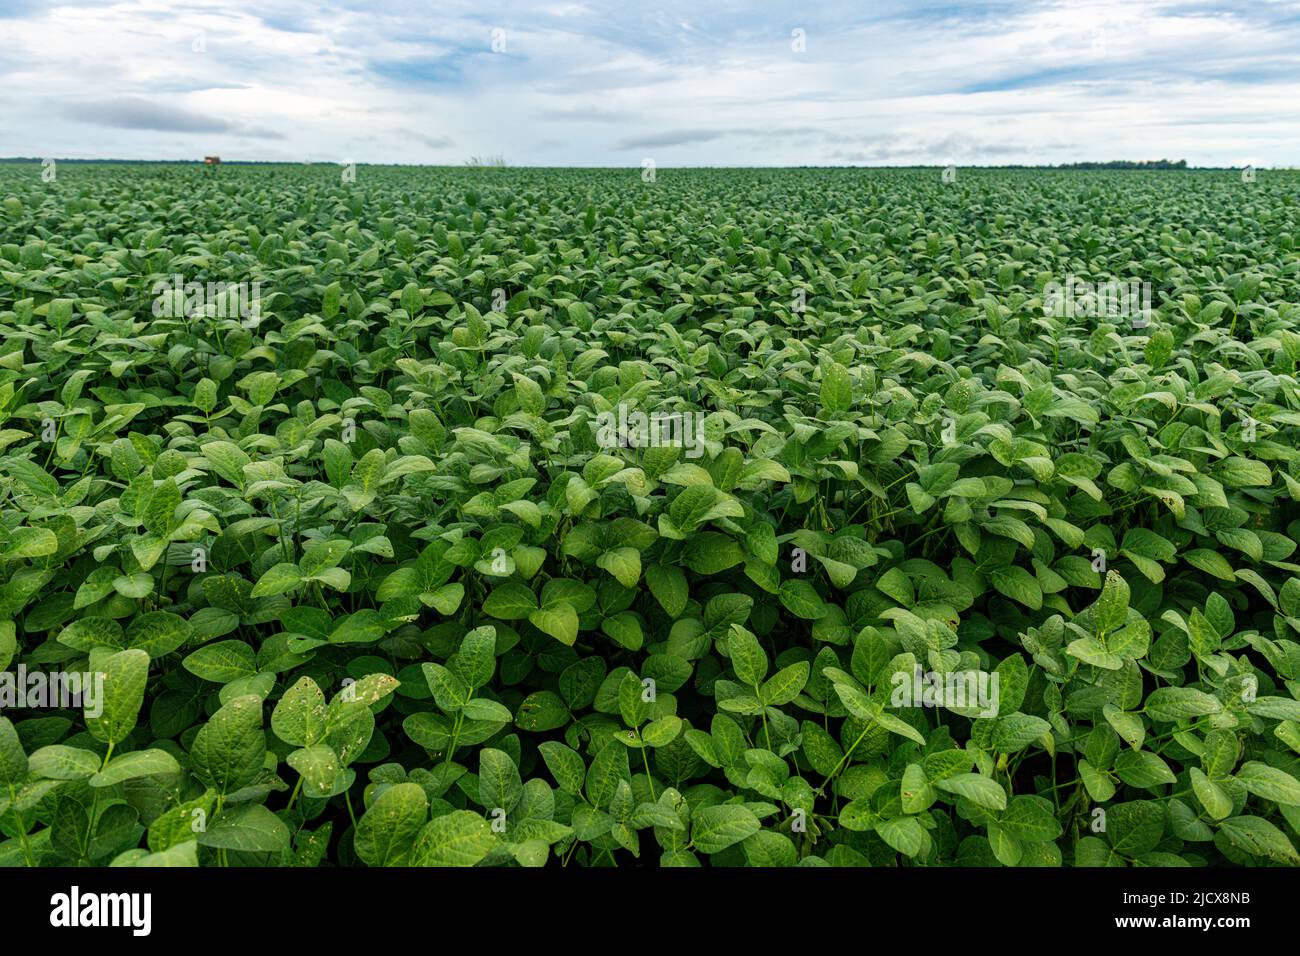 Giant soy fields, Sinop, Mato Grosso, Brazil, South America Stock Photo